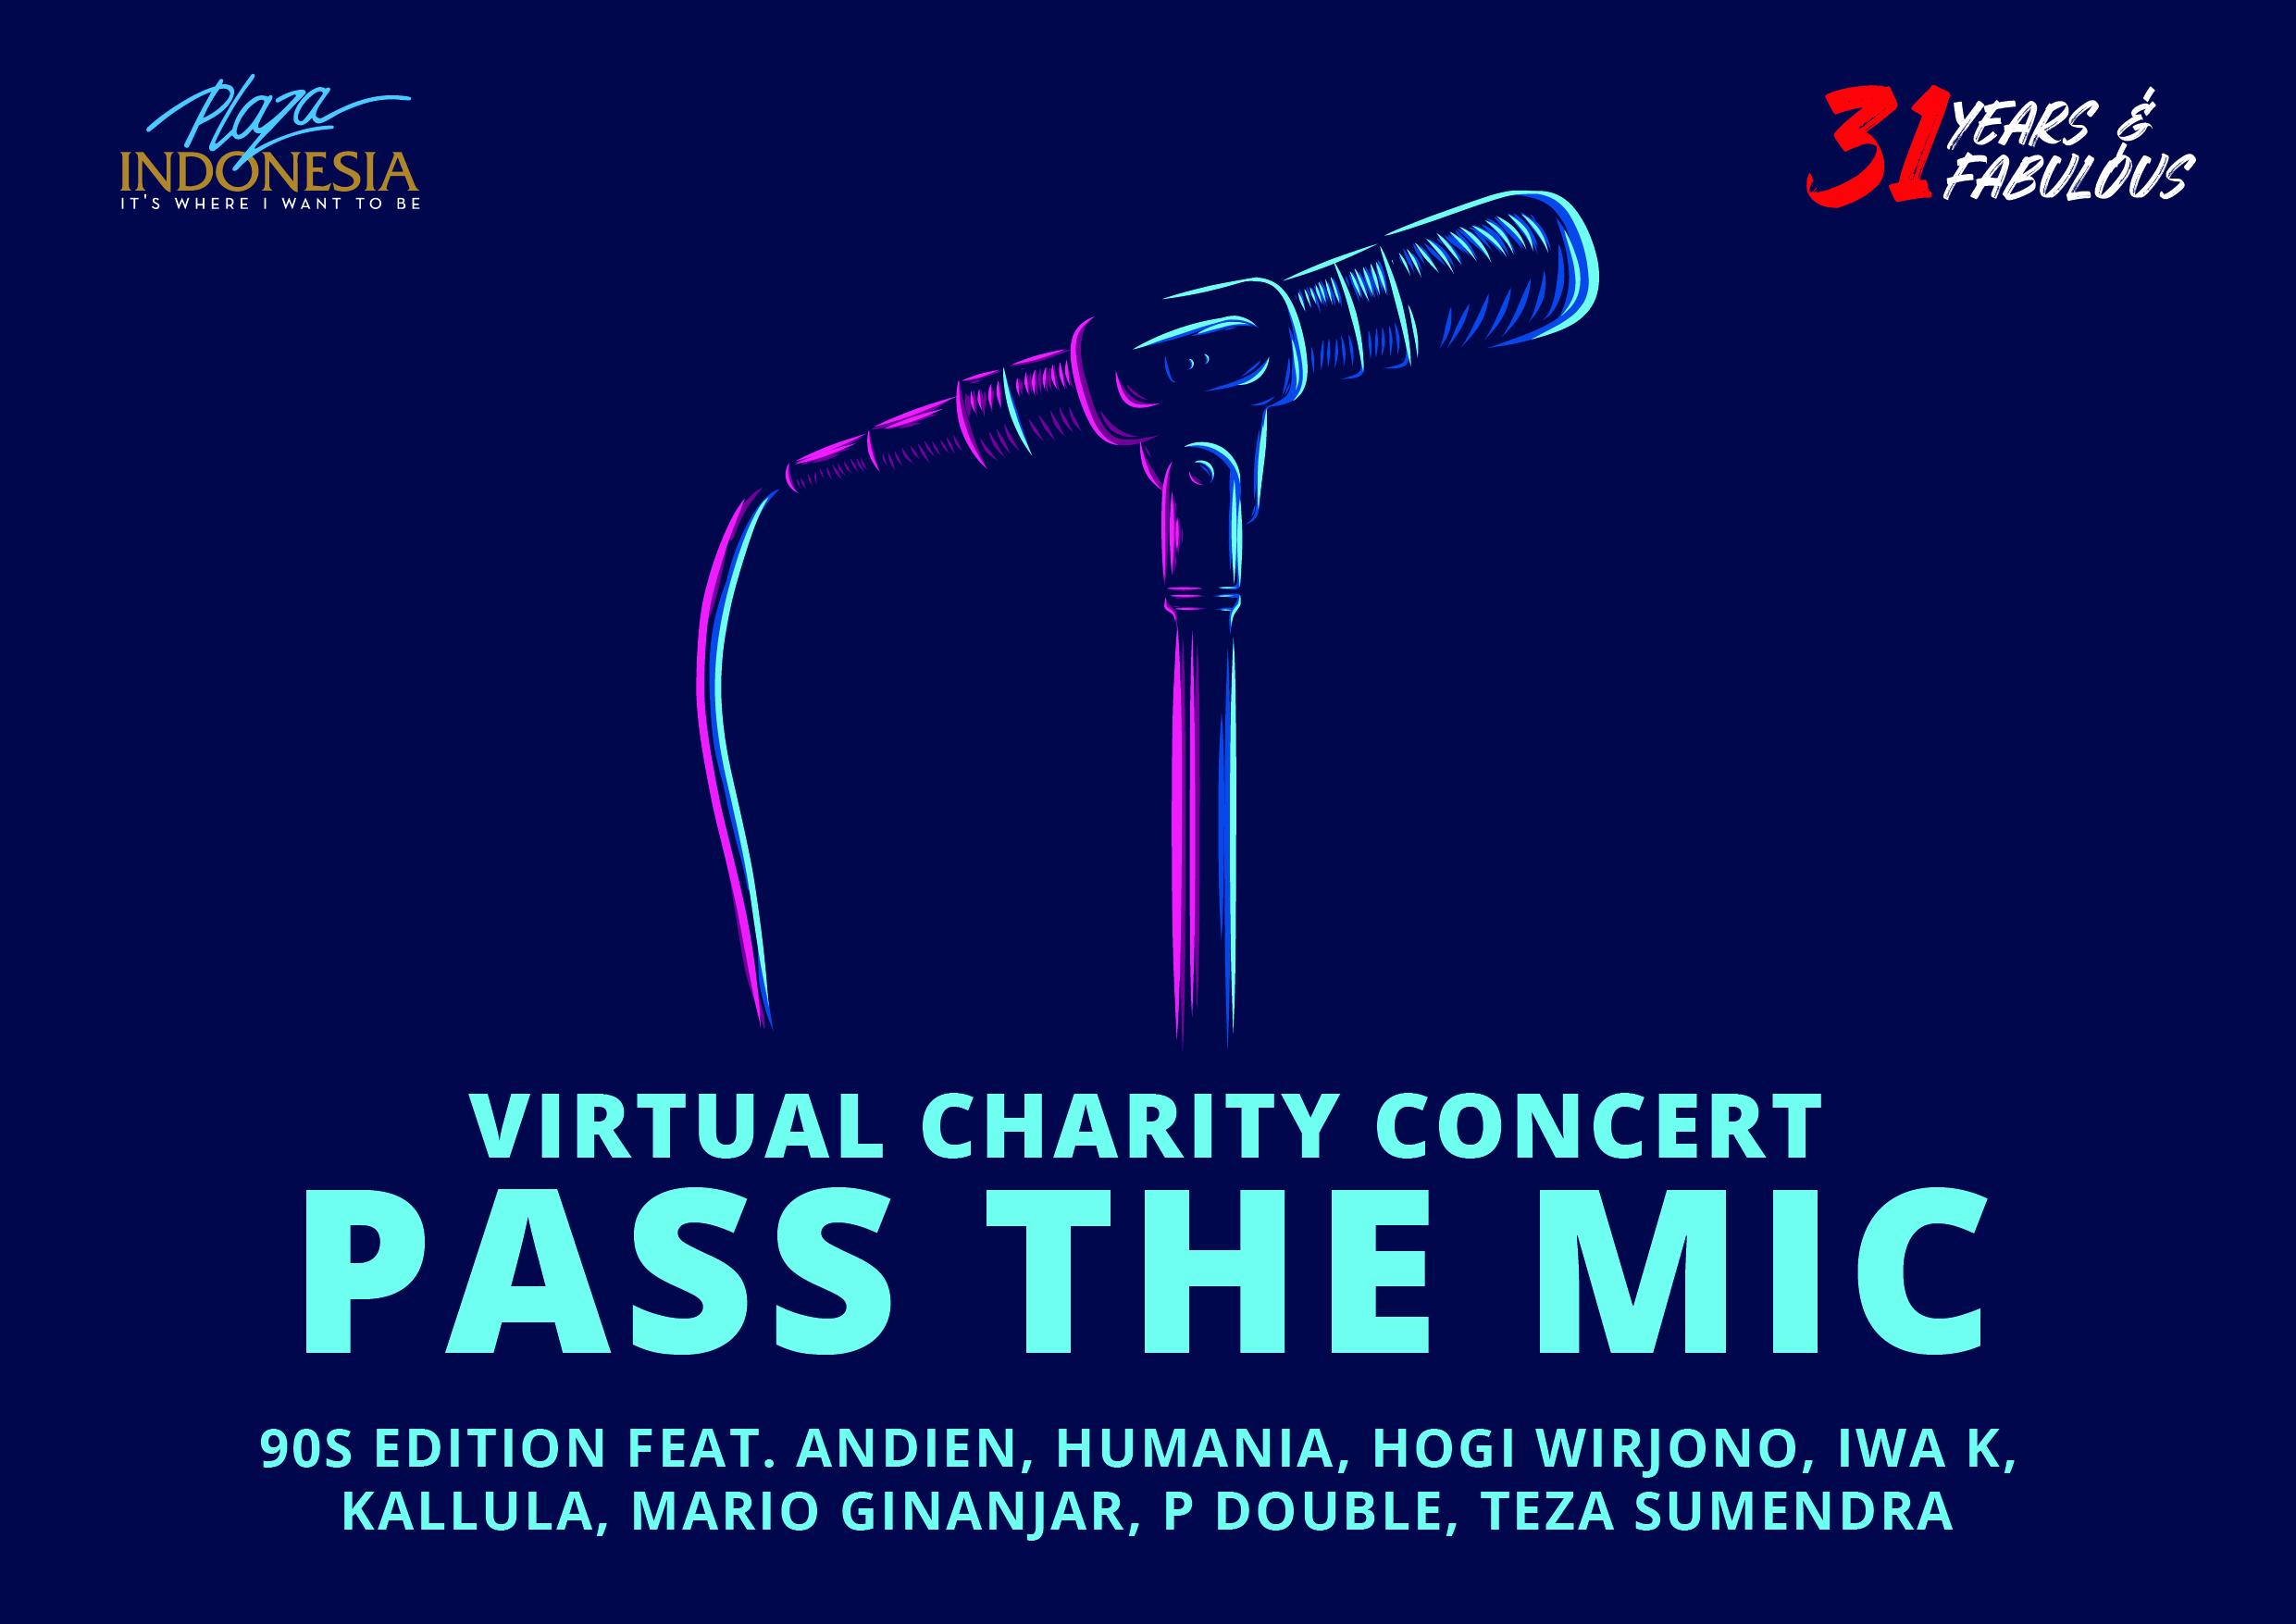 Anniversary Ke-31, Plaza Indonesia Gelar Konser Amal ‘Pass The Mic'